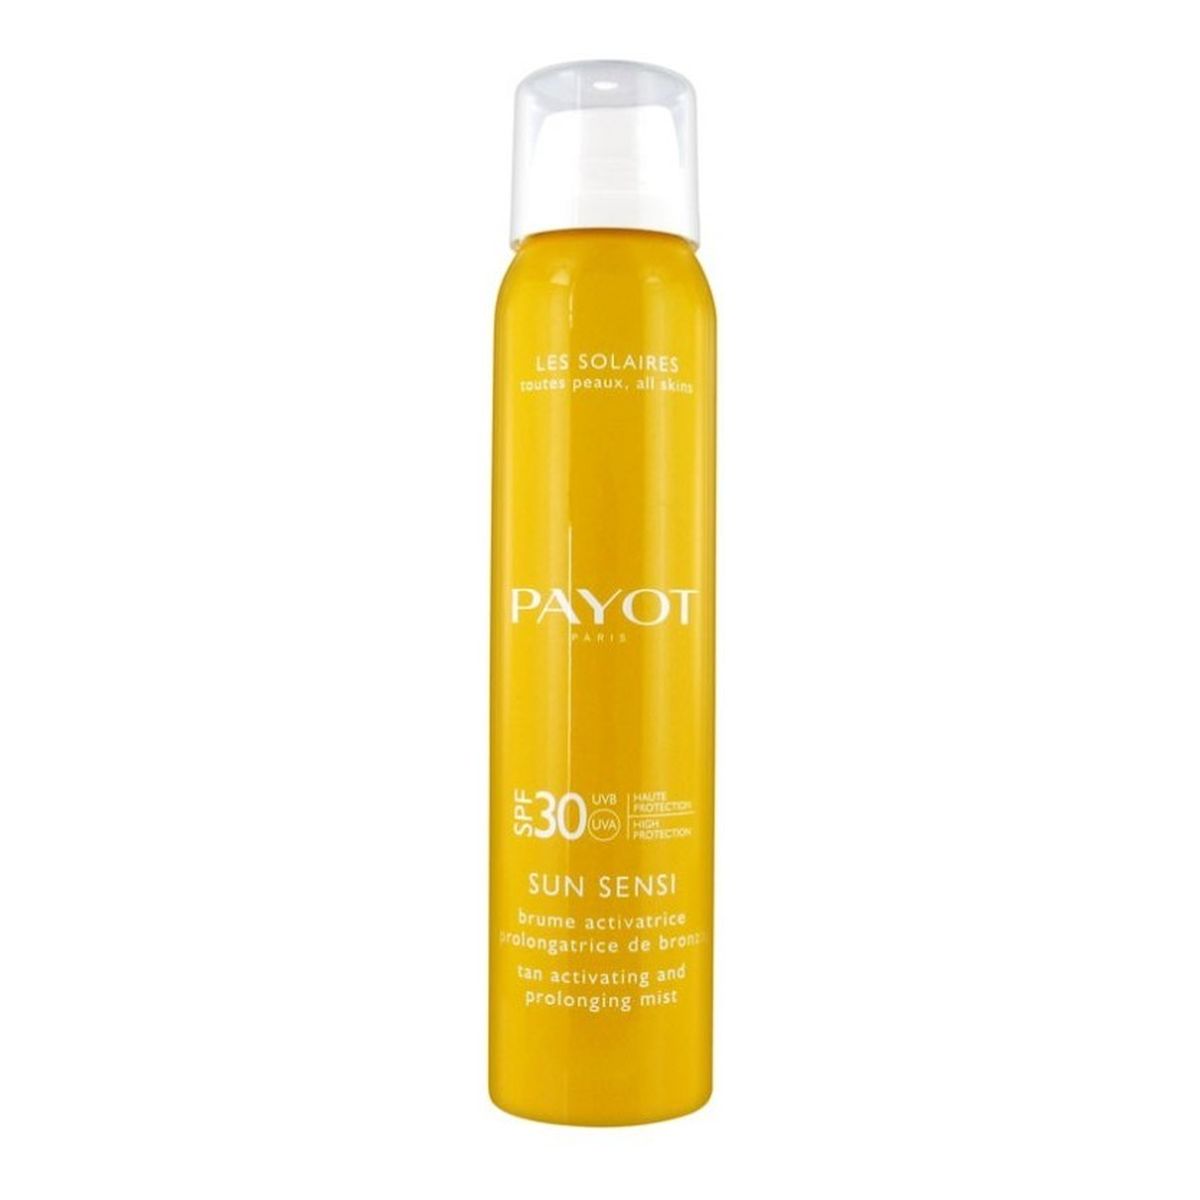 Payot Sun Sensi SPF30 Spray ochronno-przeciwstarzeniowy 125ml